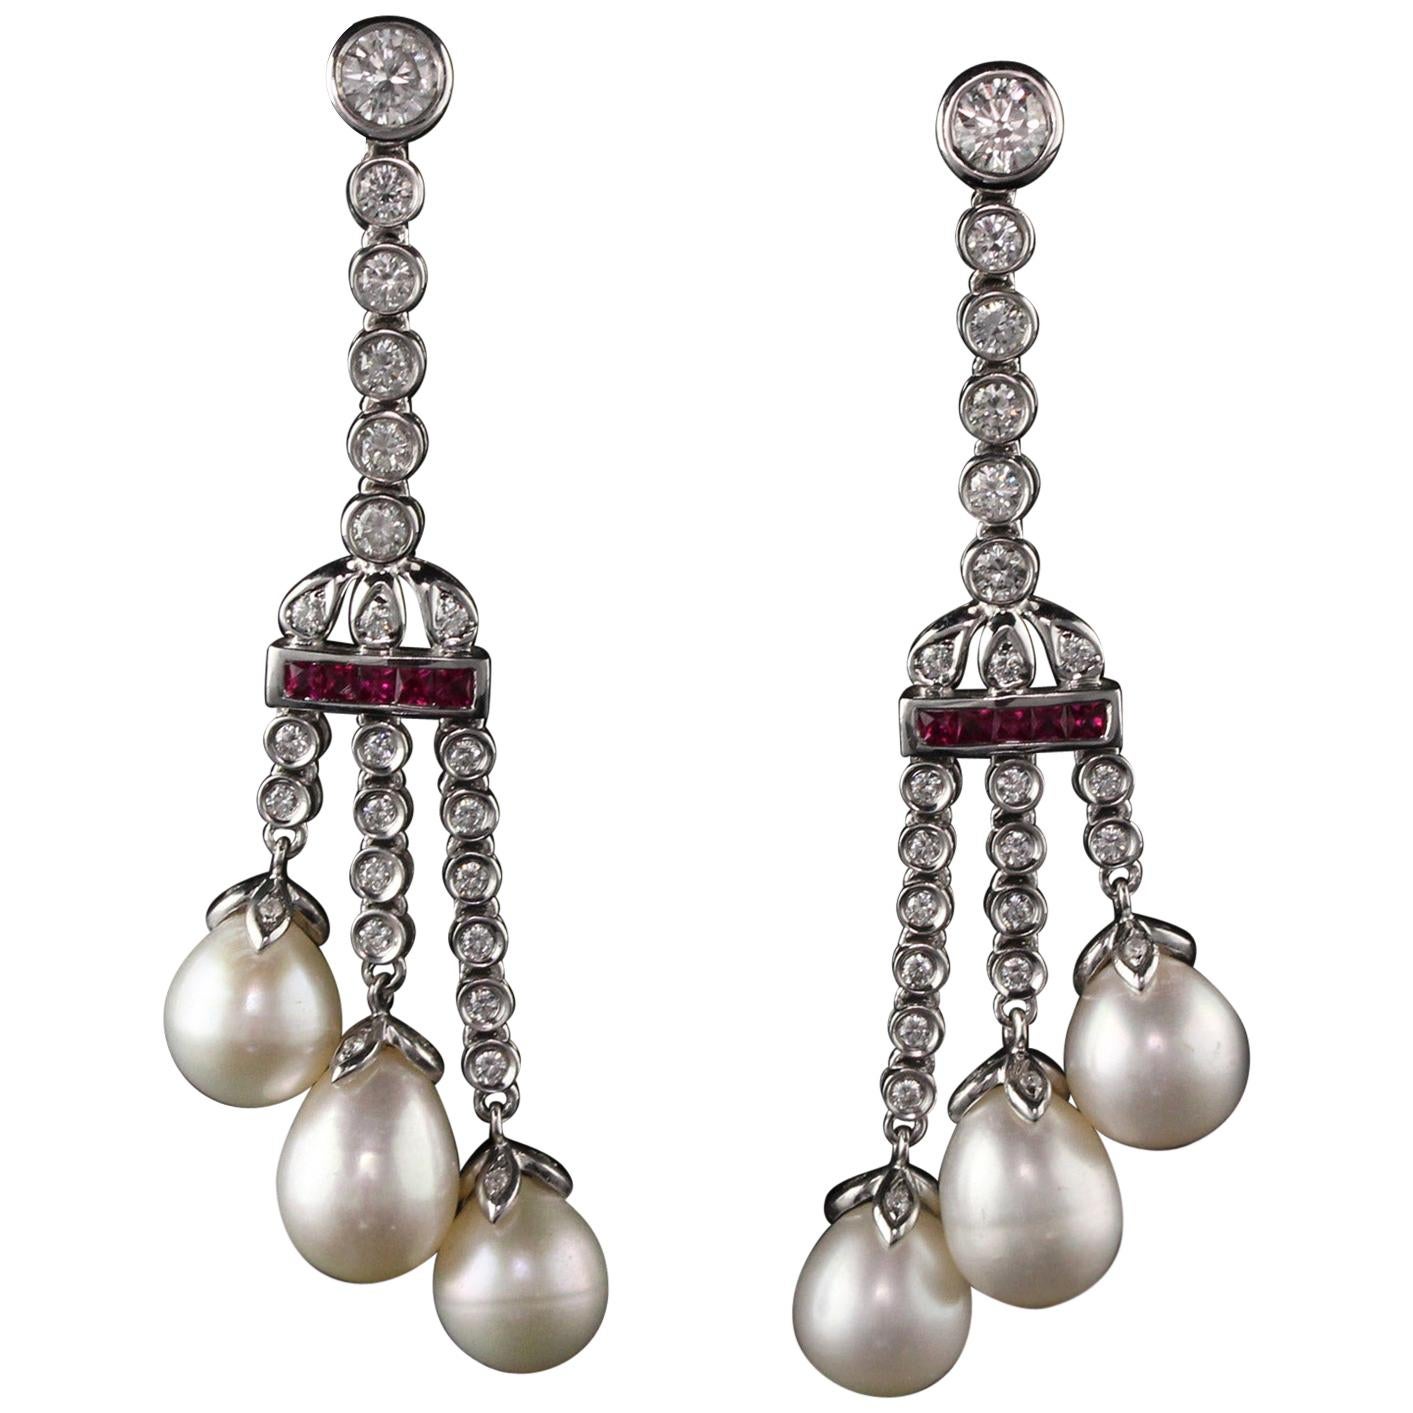 Vintage Estate 18 Karat White Gold Diamond, Ruby, and Pearl Earrings